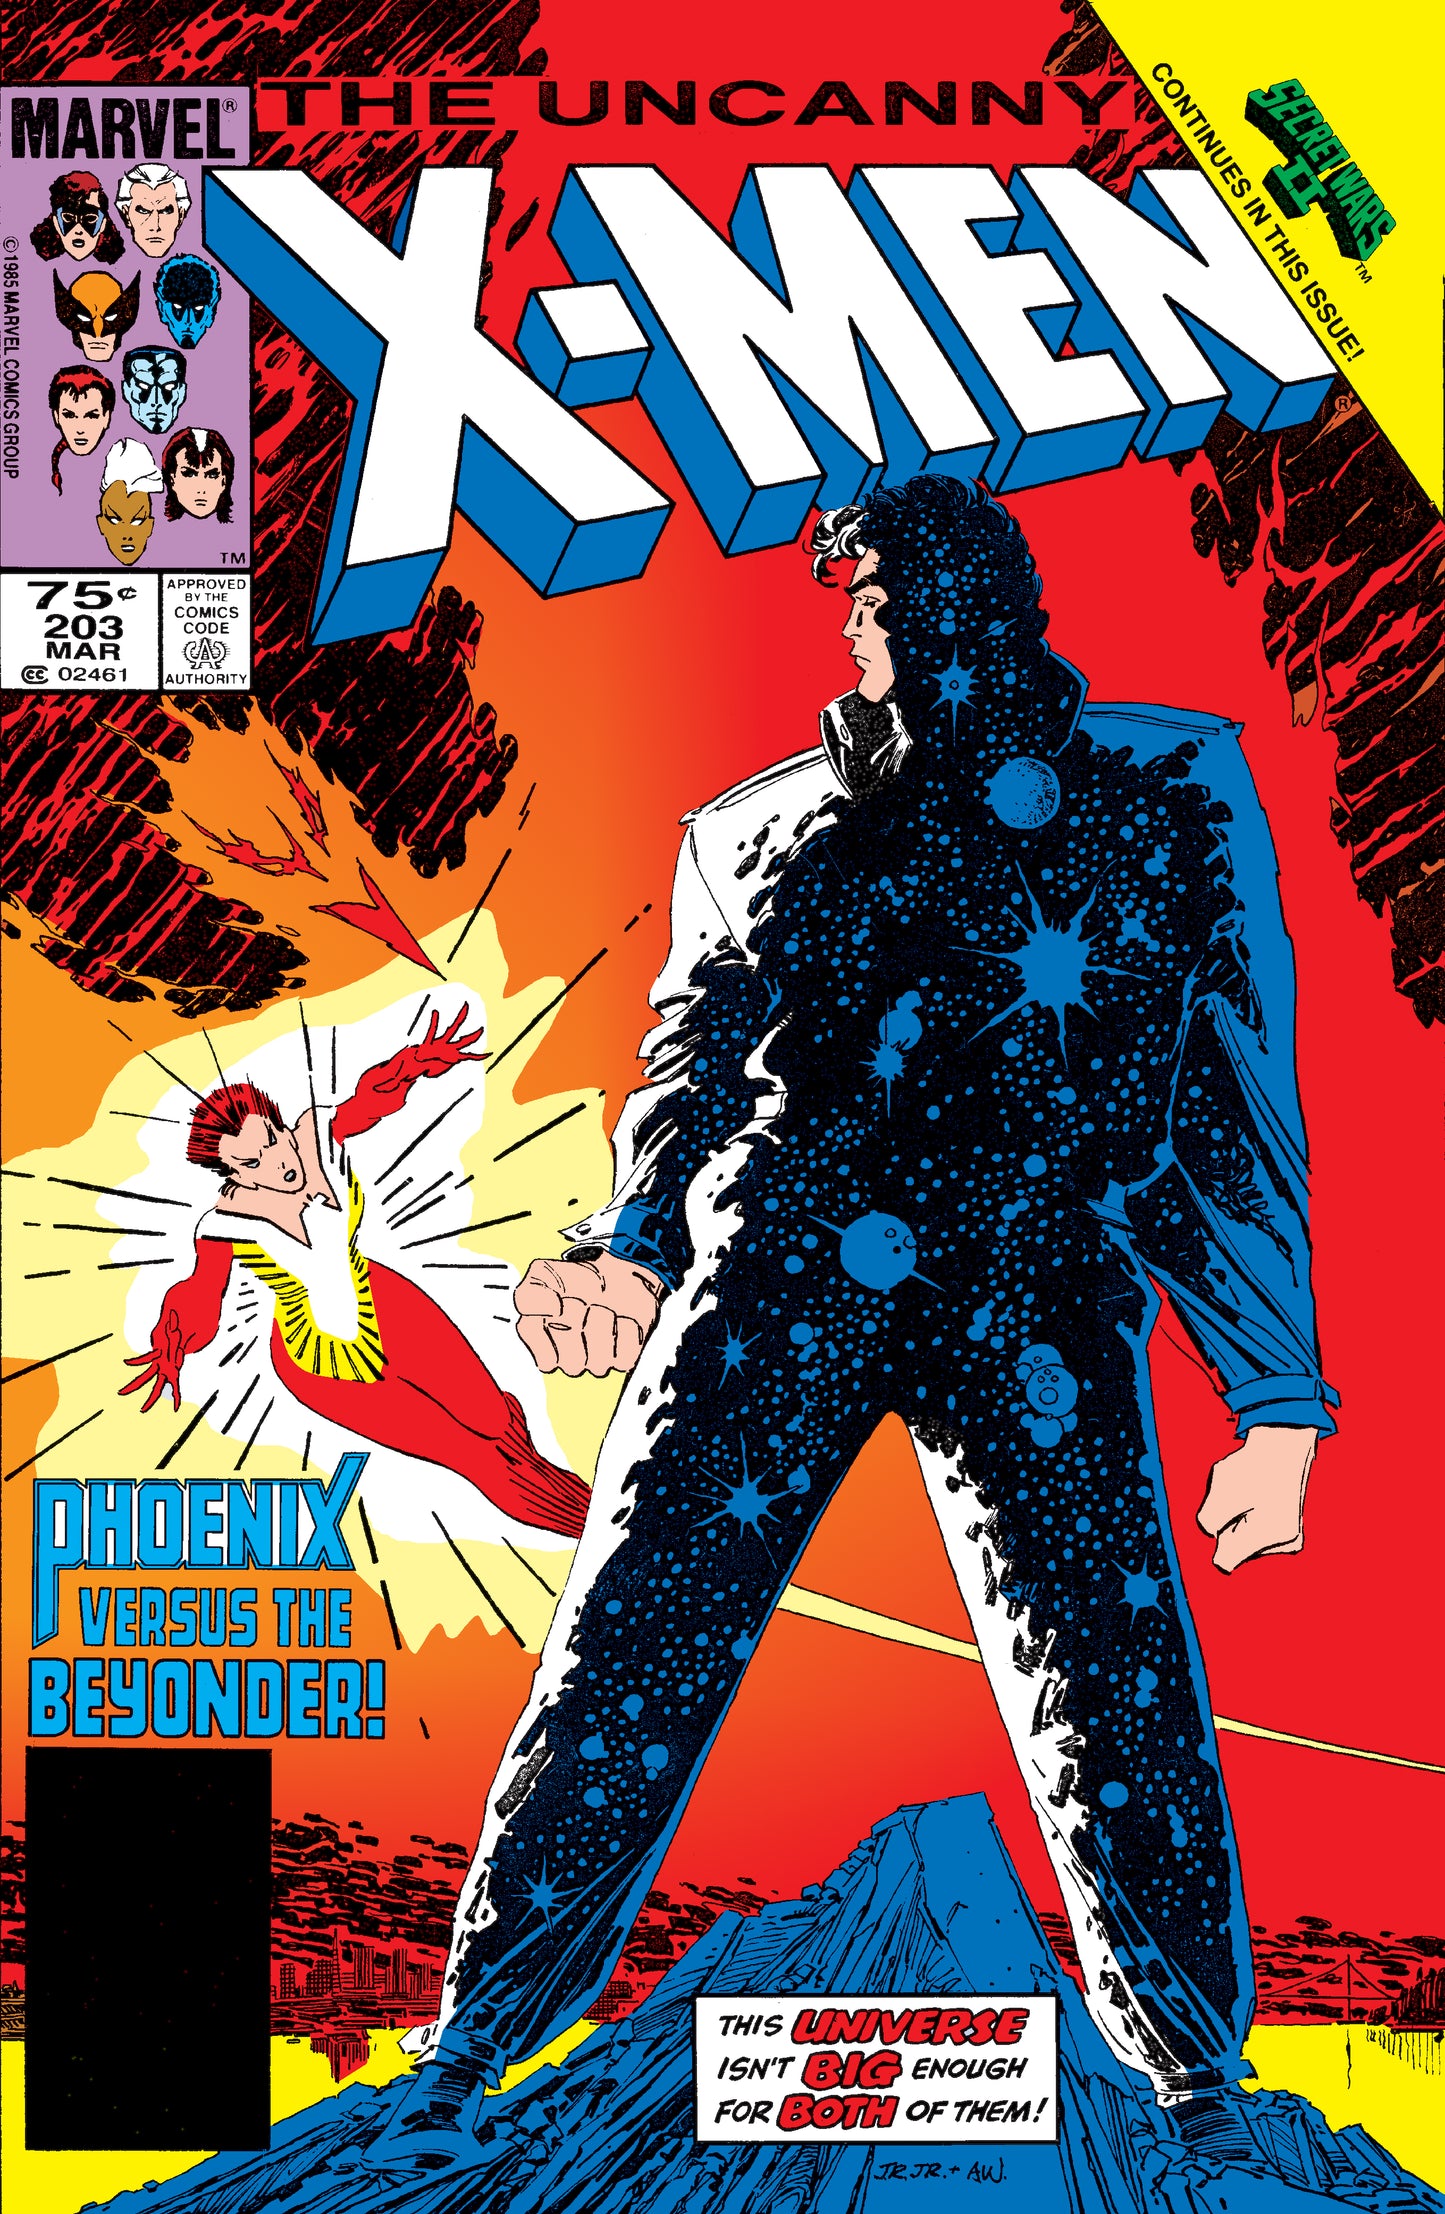 Uncanny X-Men #203 (VF+)